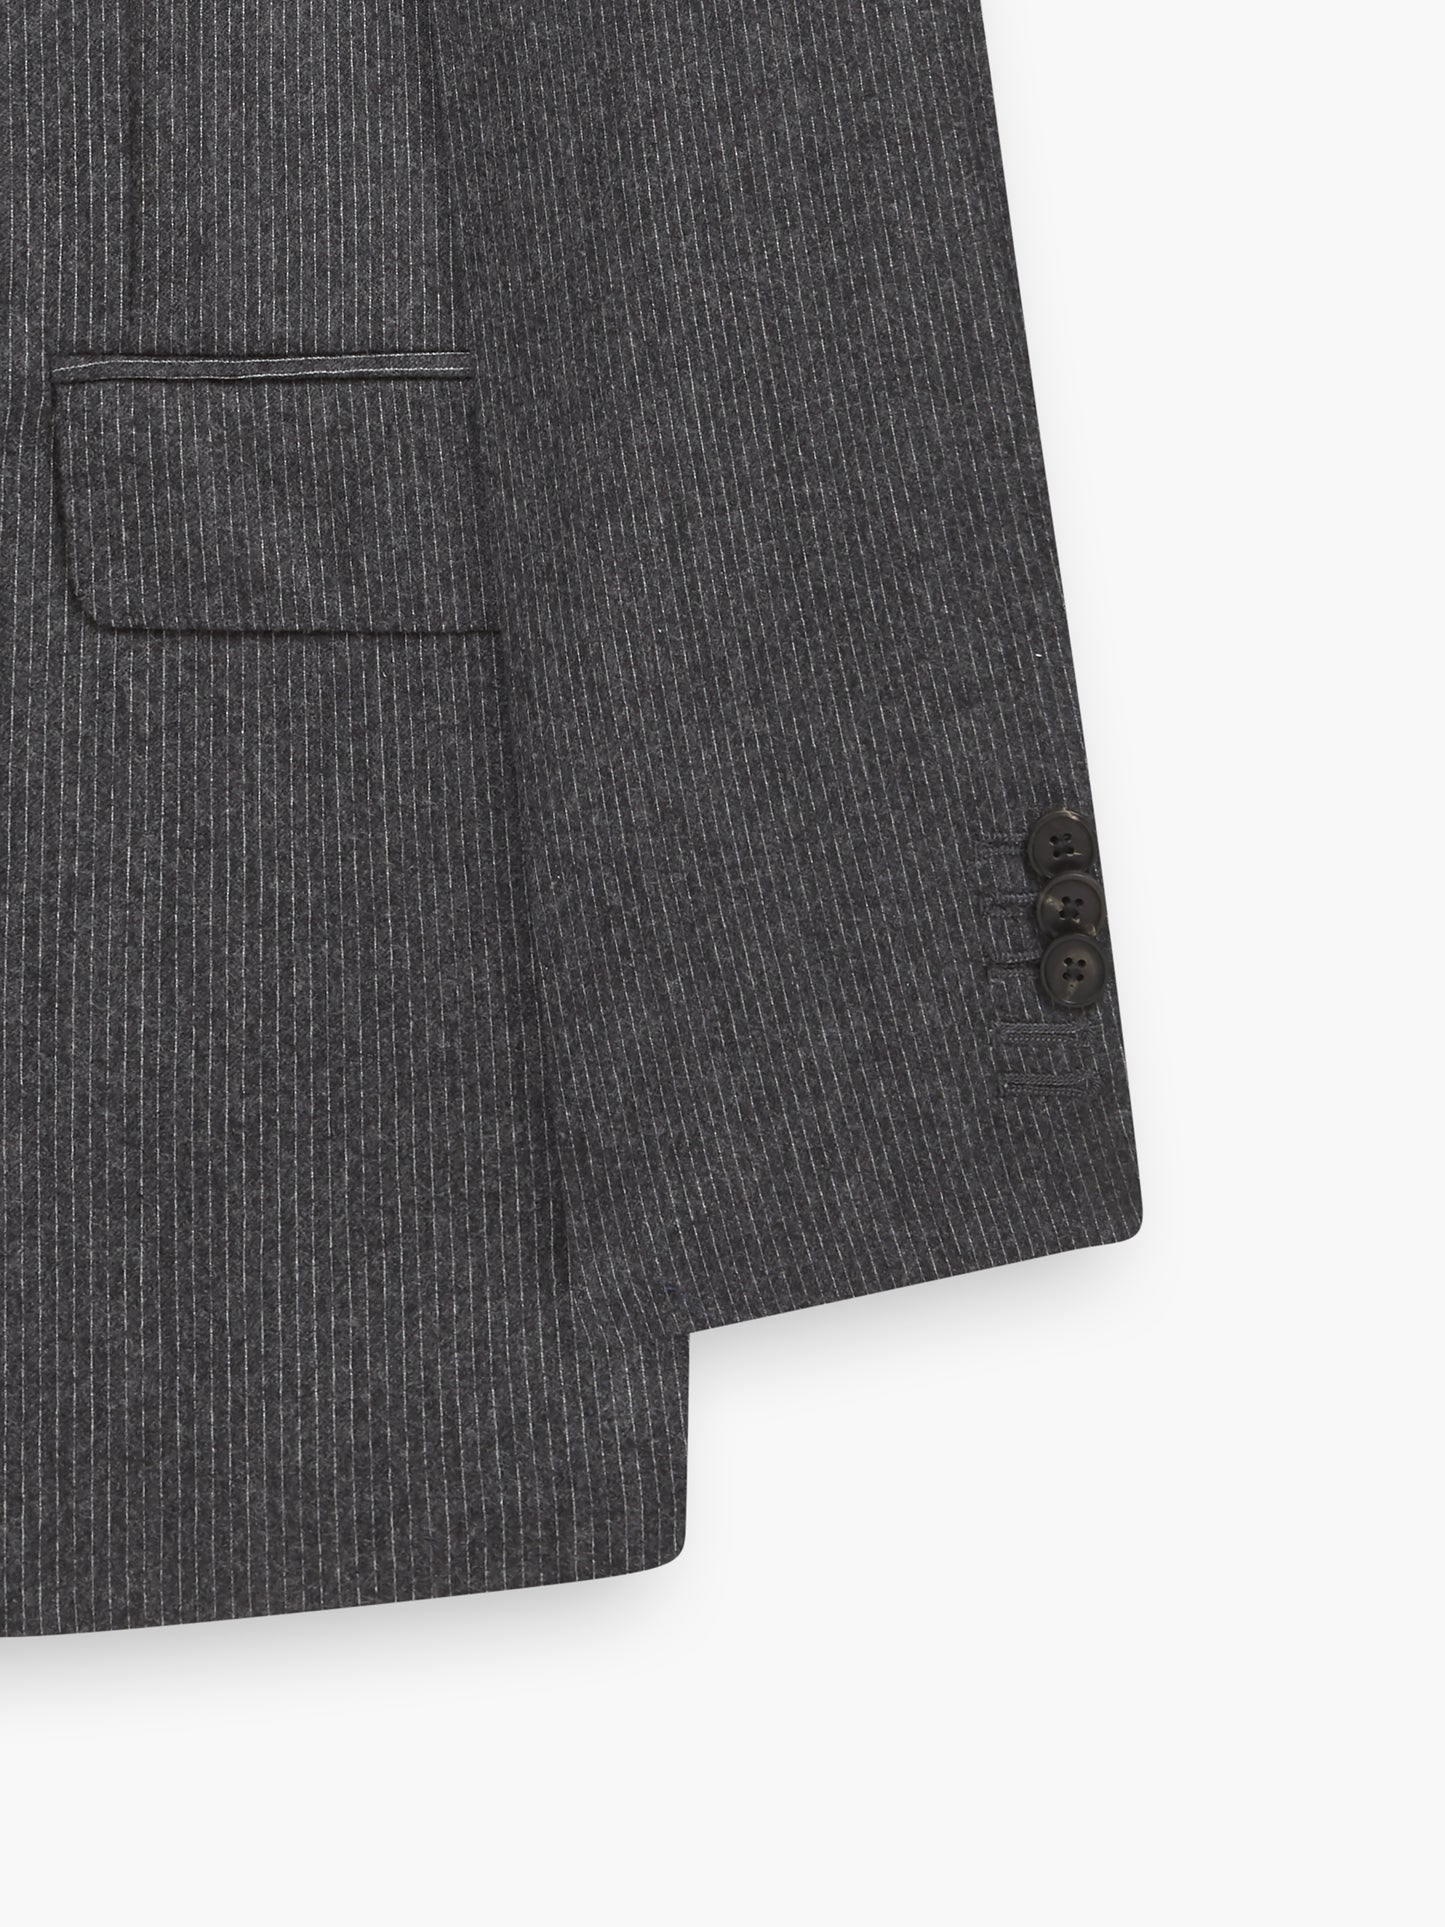 Gainsborough Pinstripe Charcoal Grey Jacket